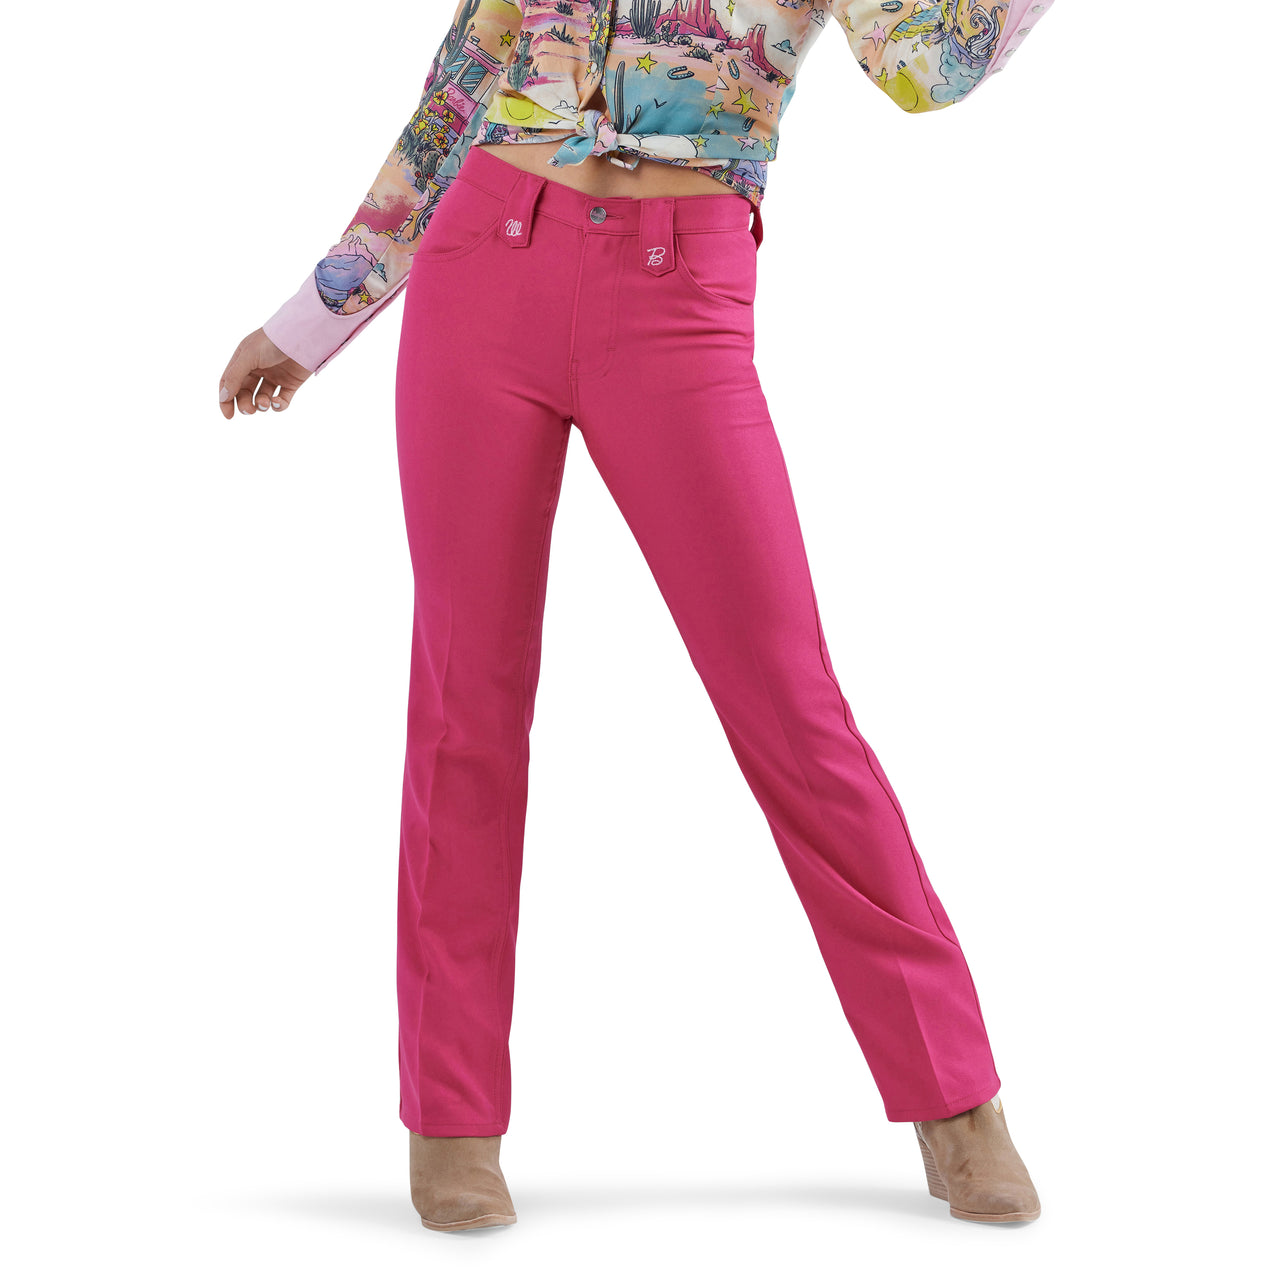 Wrangler X Barbie Women's Wrancher Jeans - Pink